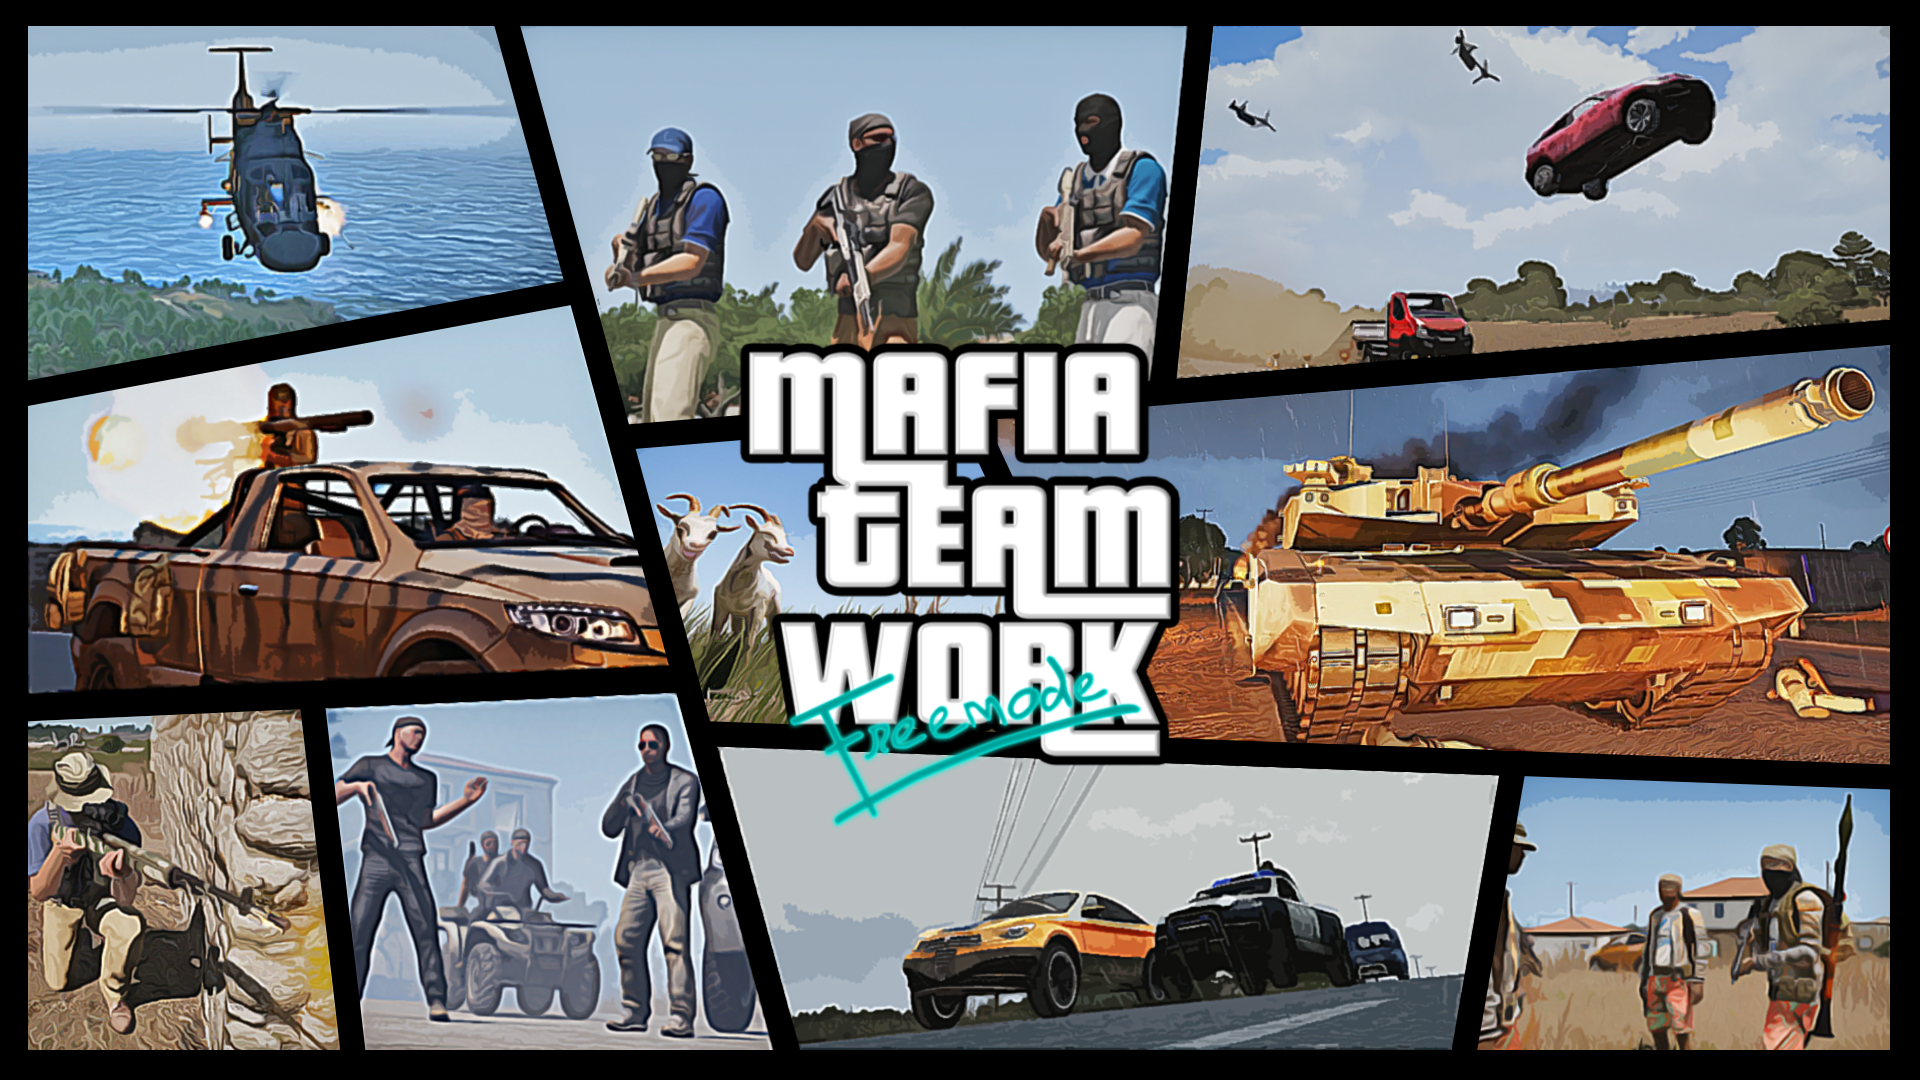 mafia_team_work_freemode_wallpaper_01.pn